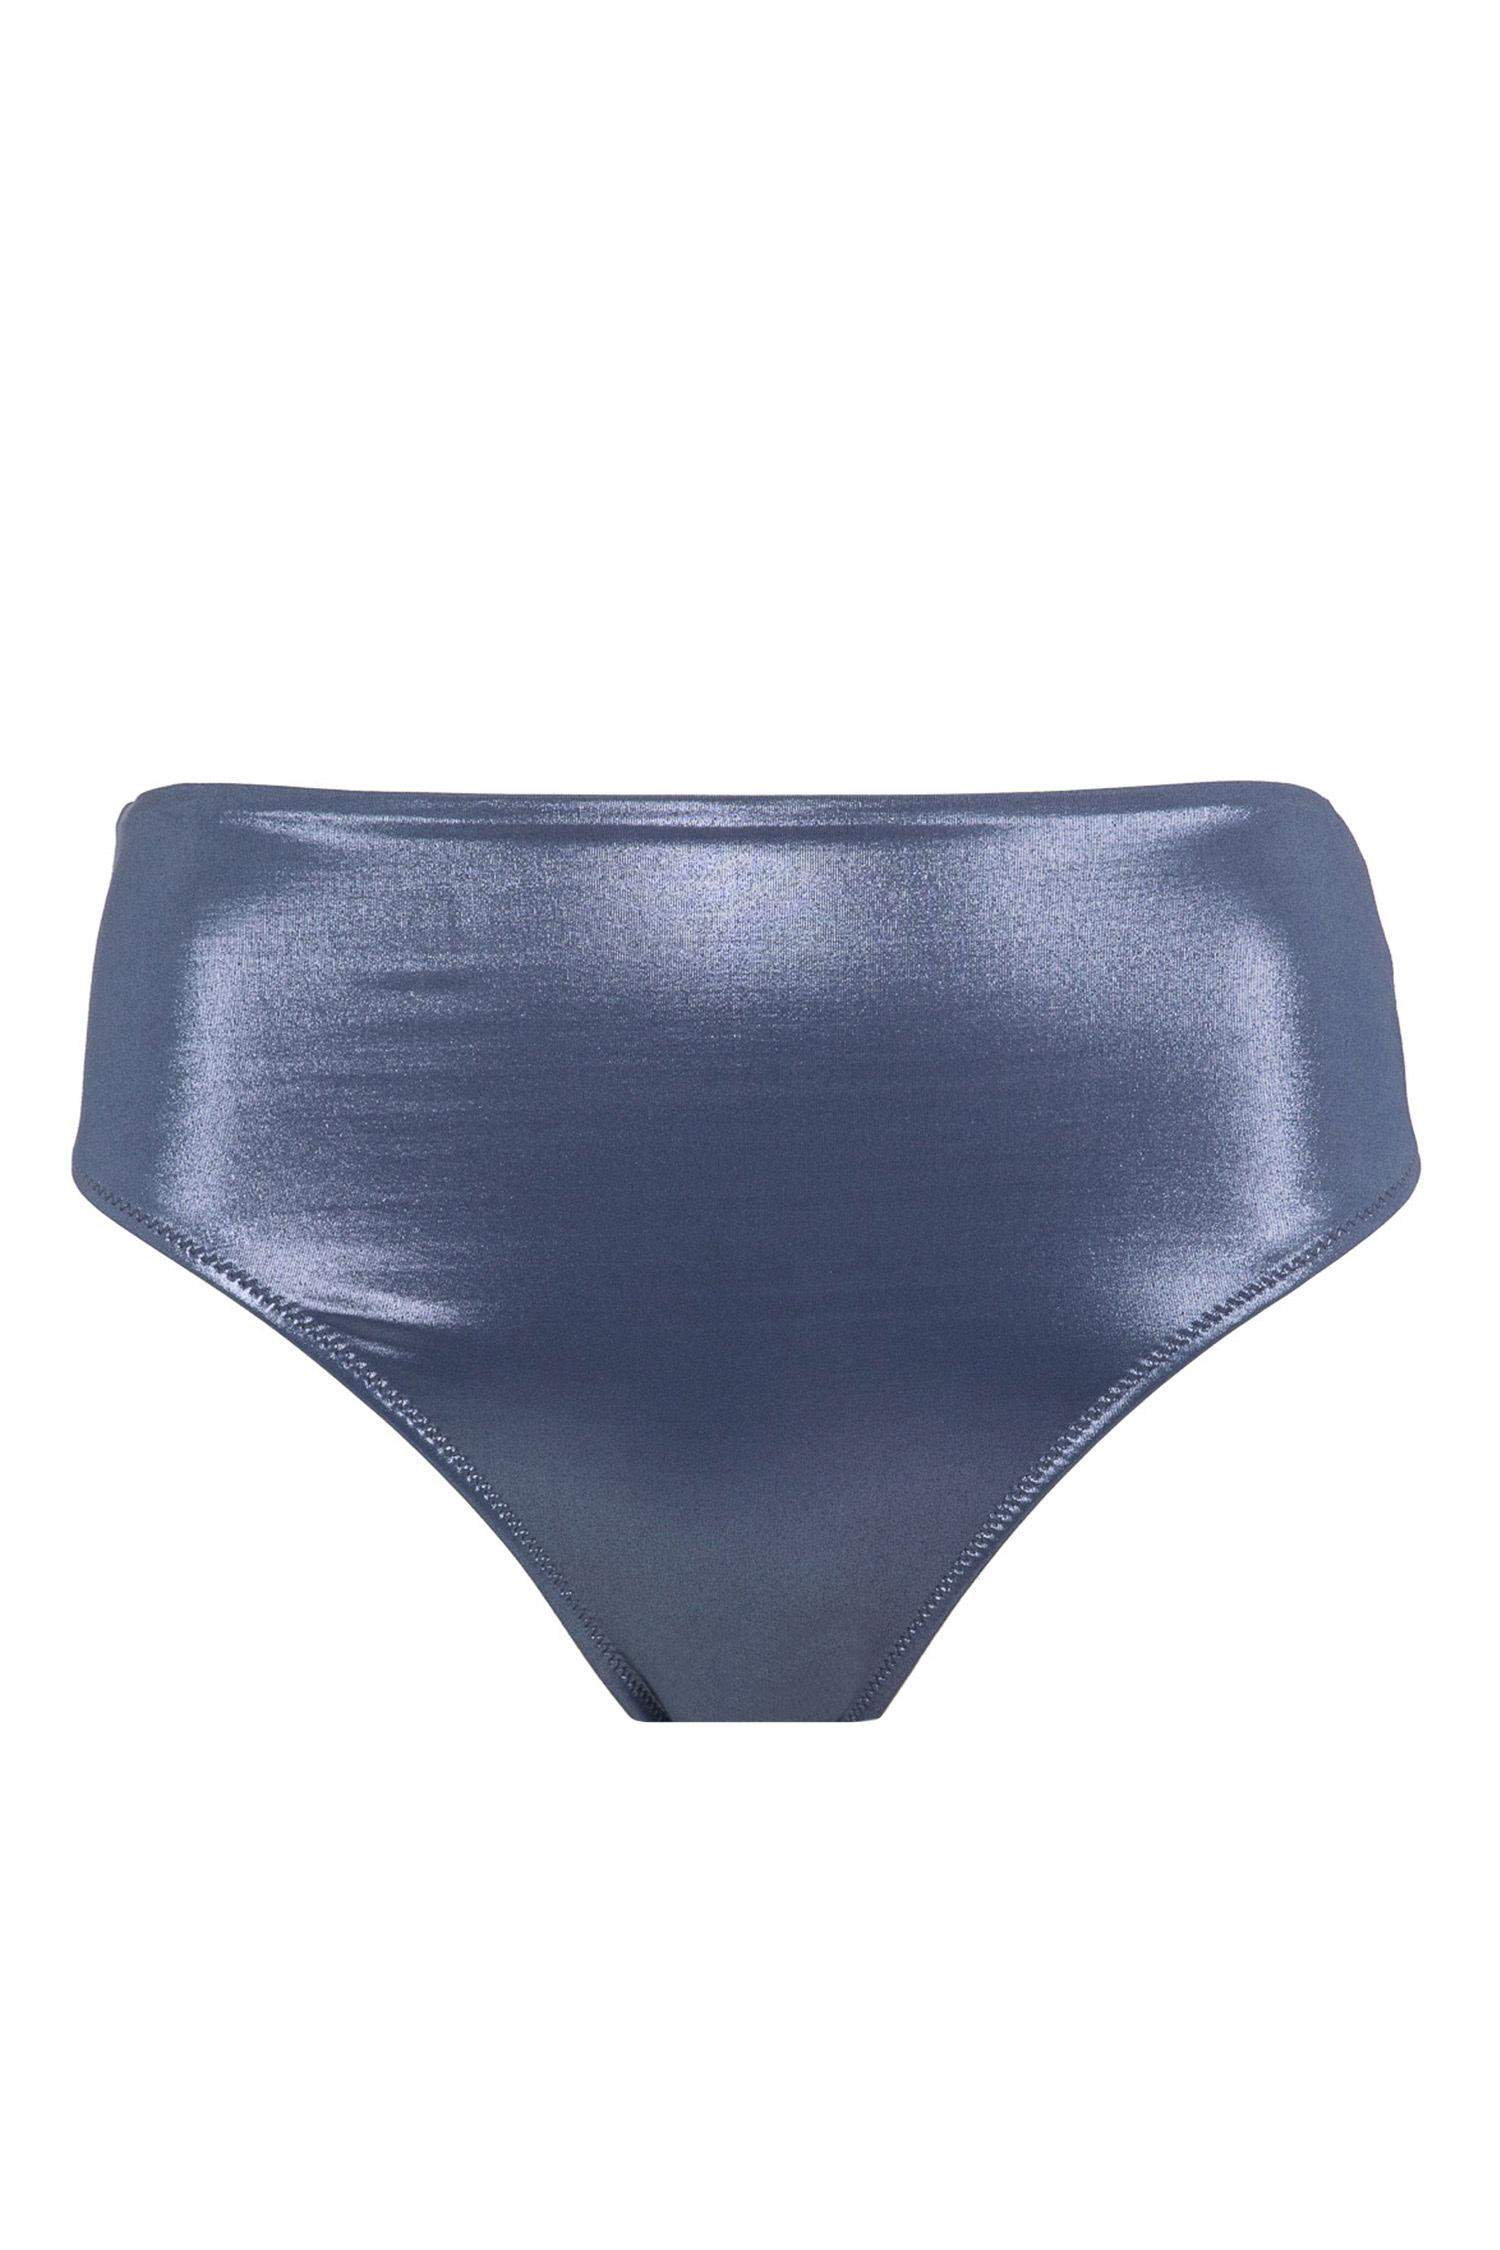 Gunmetal Metallic Thong Bikini Bottom